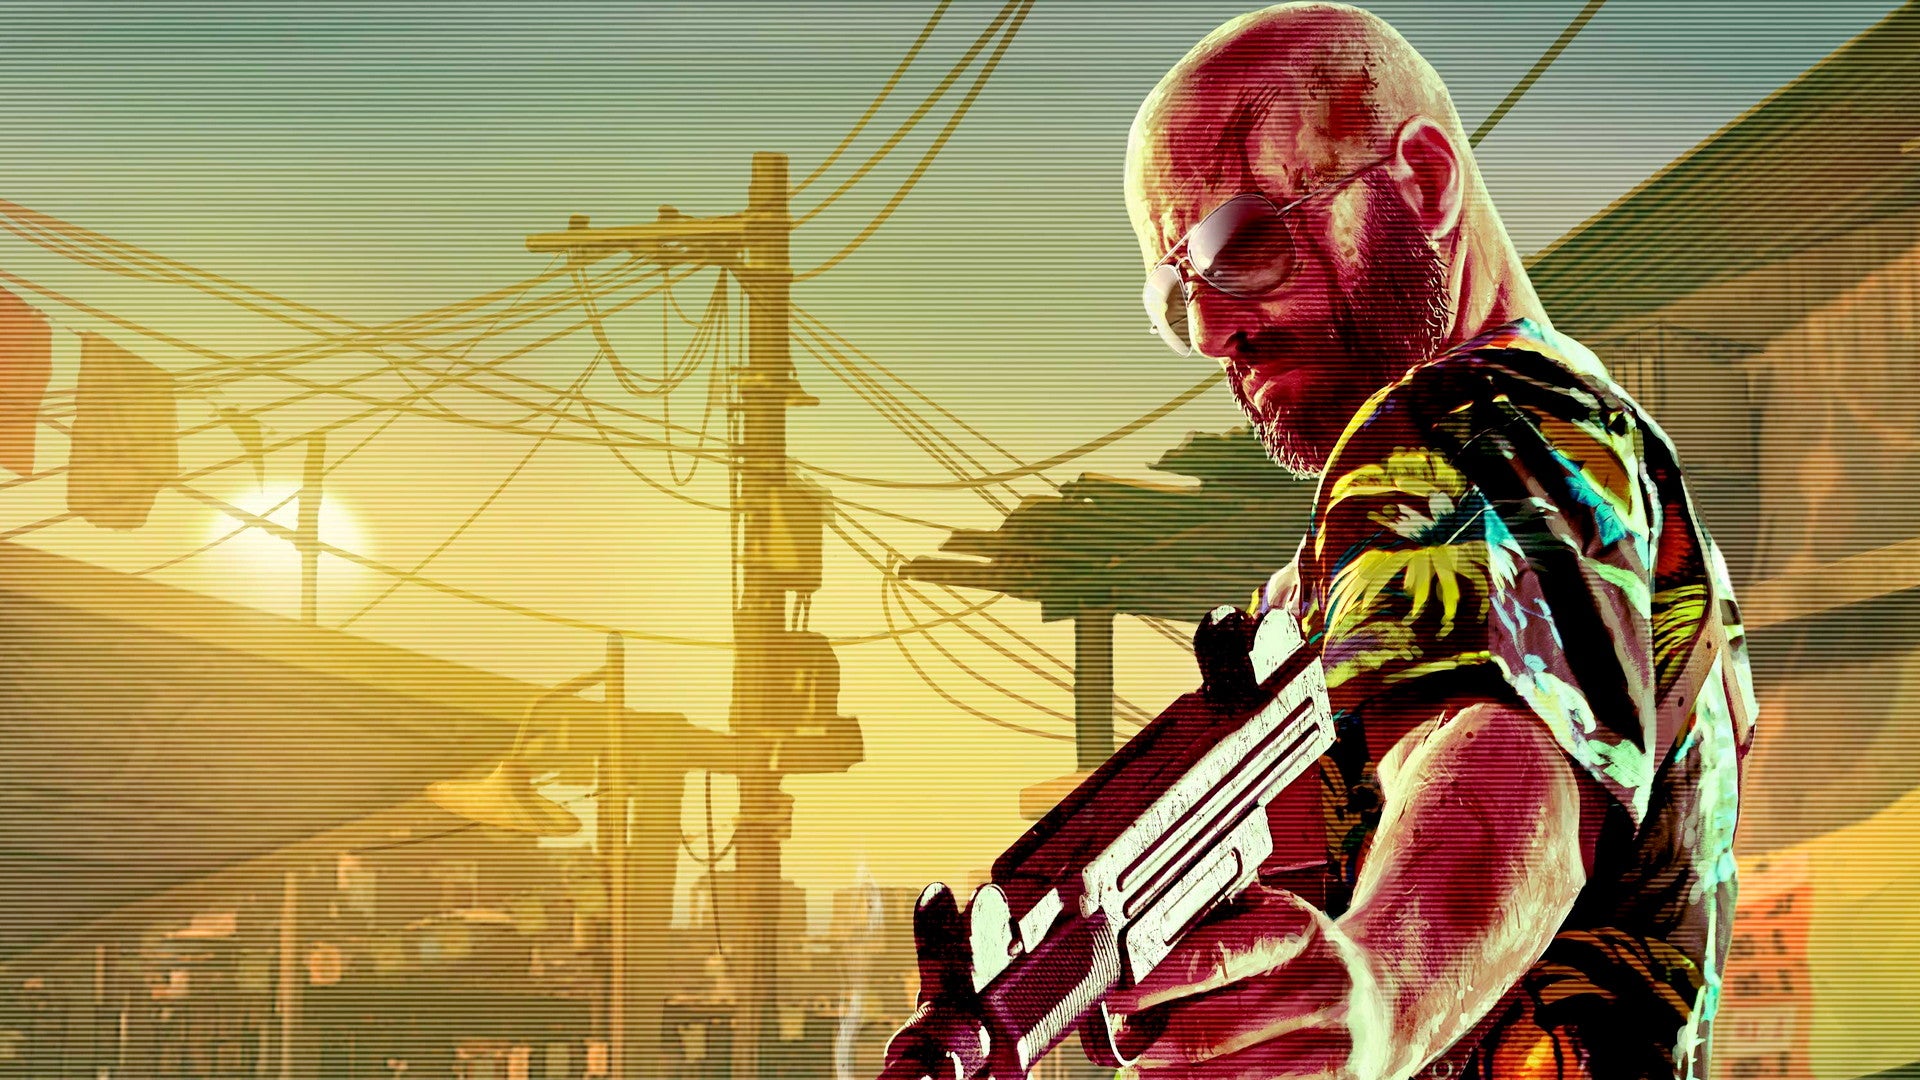 Bilder zu Max Payne 3: Wie Rockstar den zehnten Geburtstag feiert